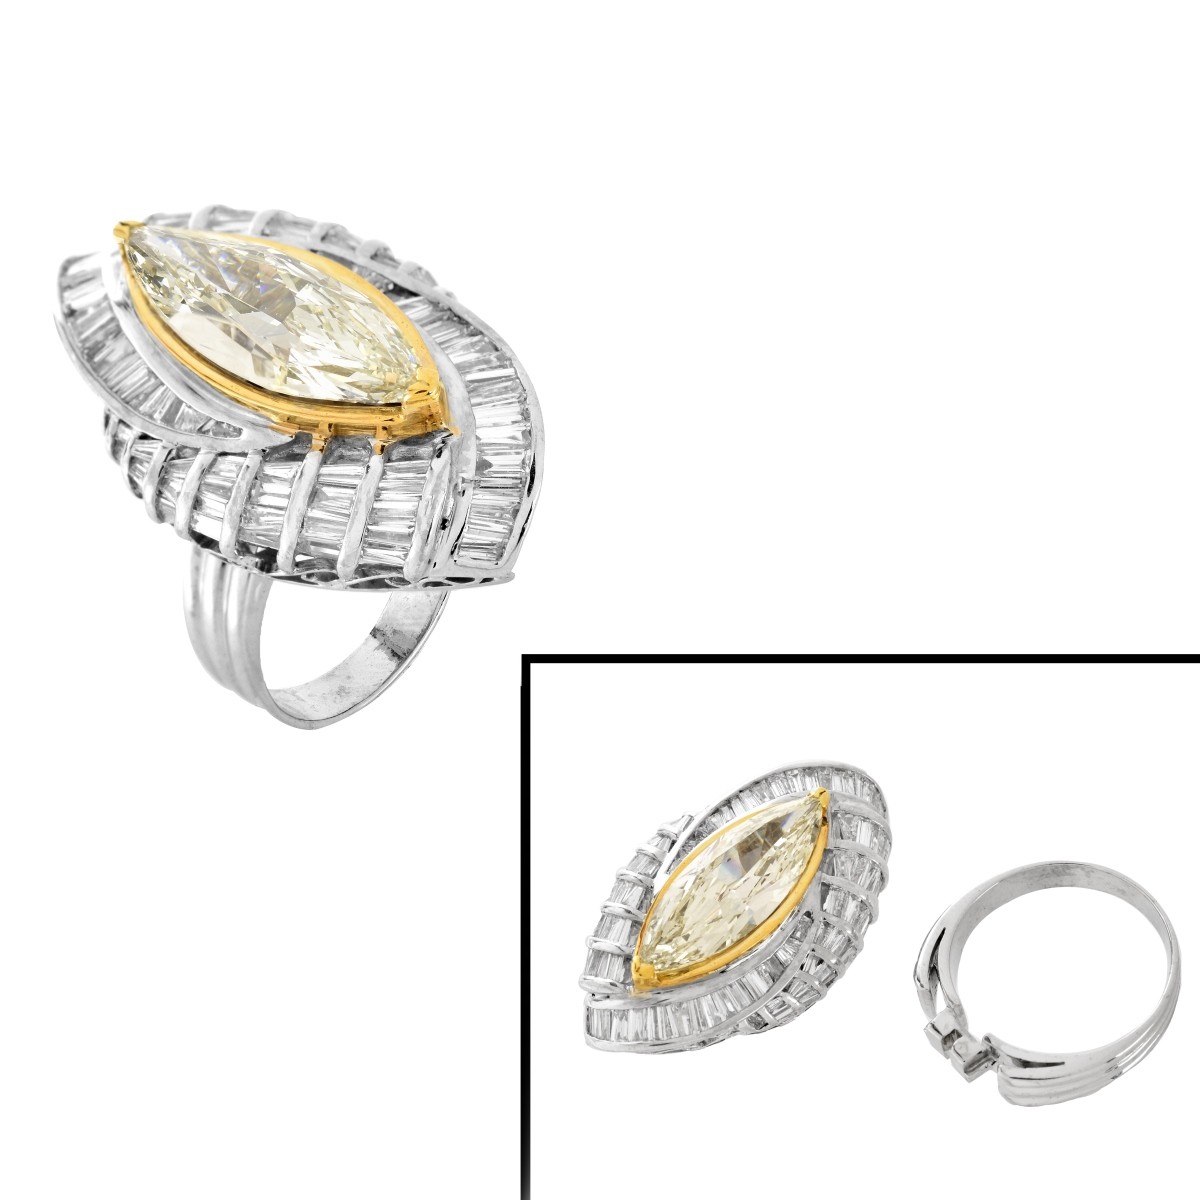 Fancy Diamond and 18K Ring / Pendant